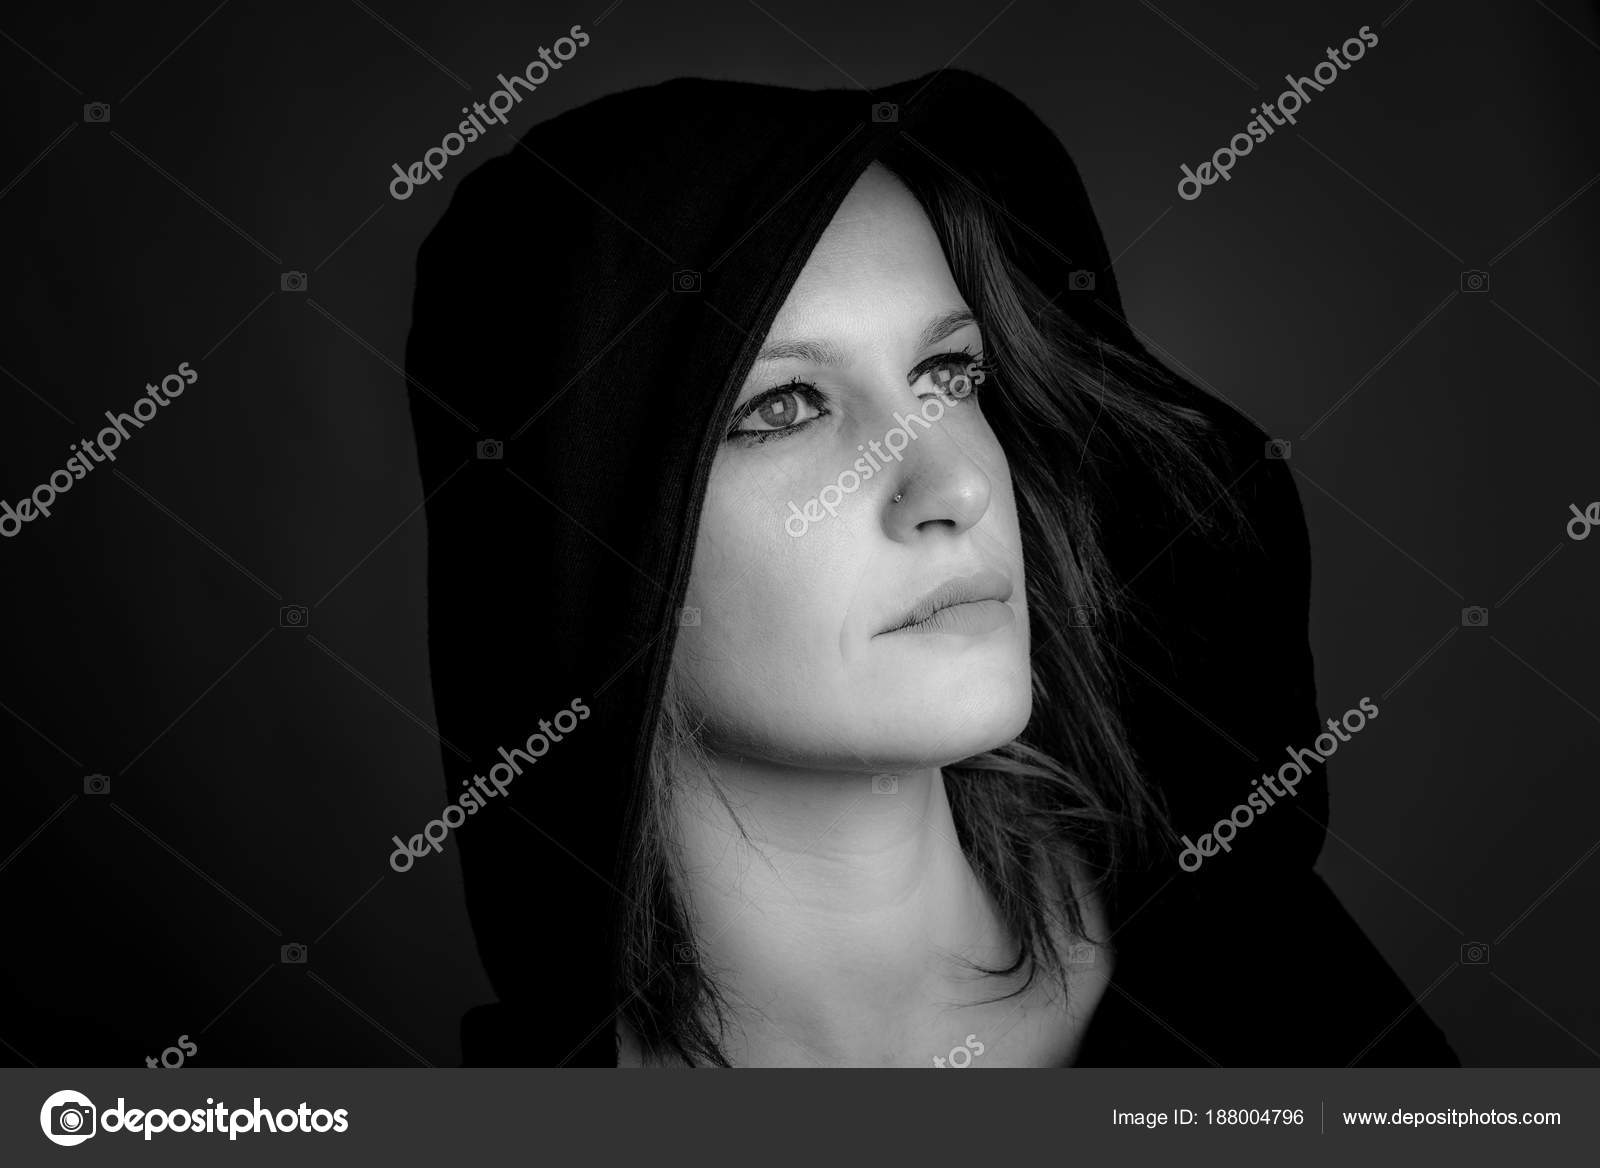 Portrait Hooded Woman Black White Image Stock Photo by ©leporiniumberto ...